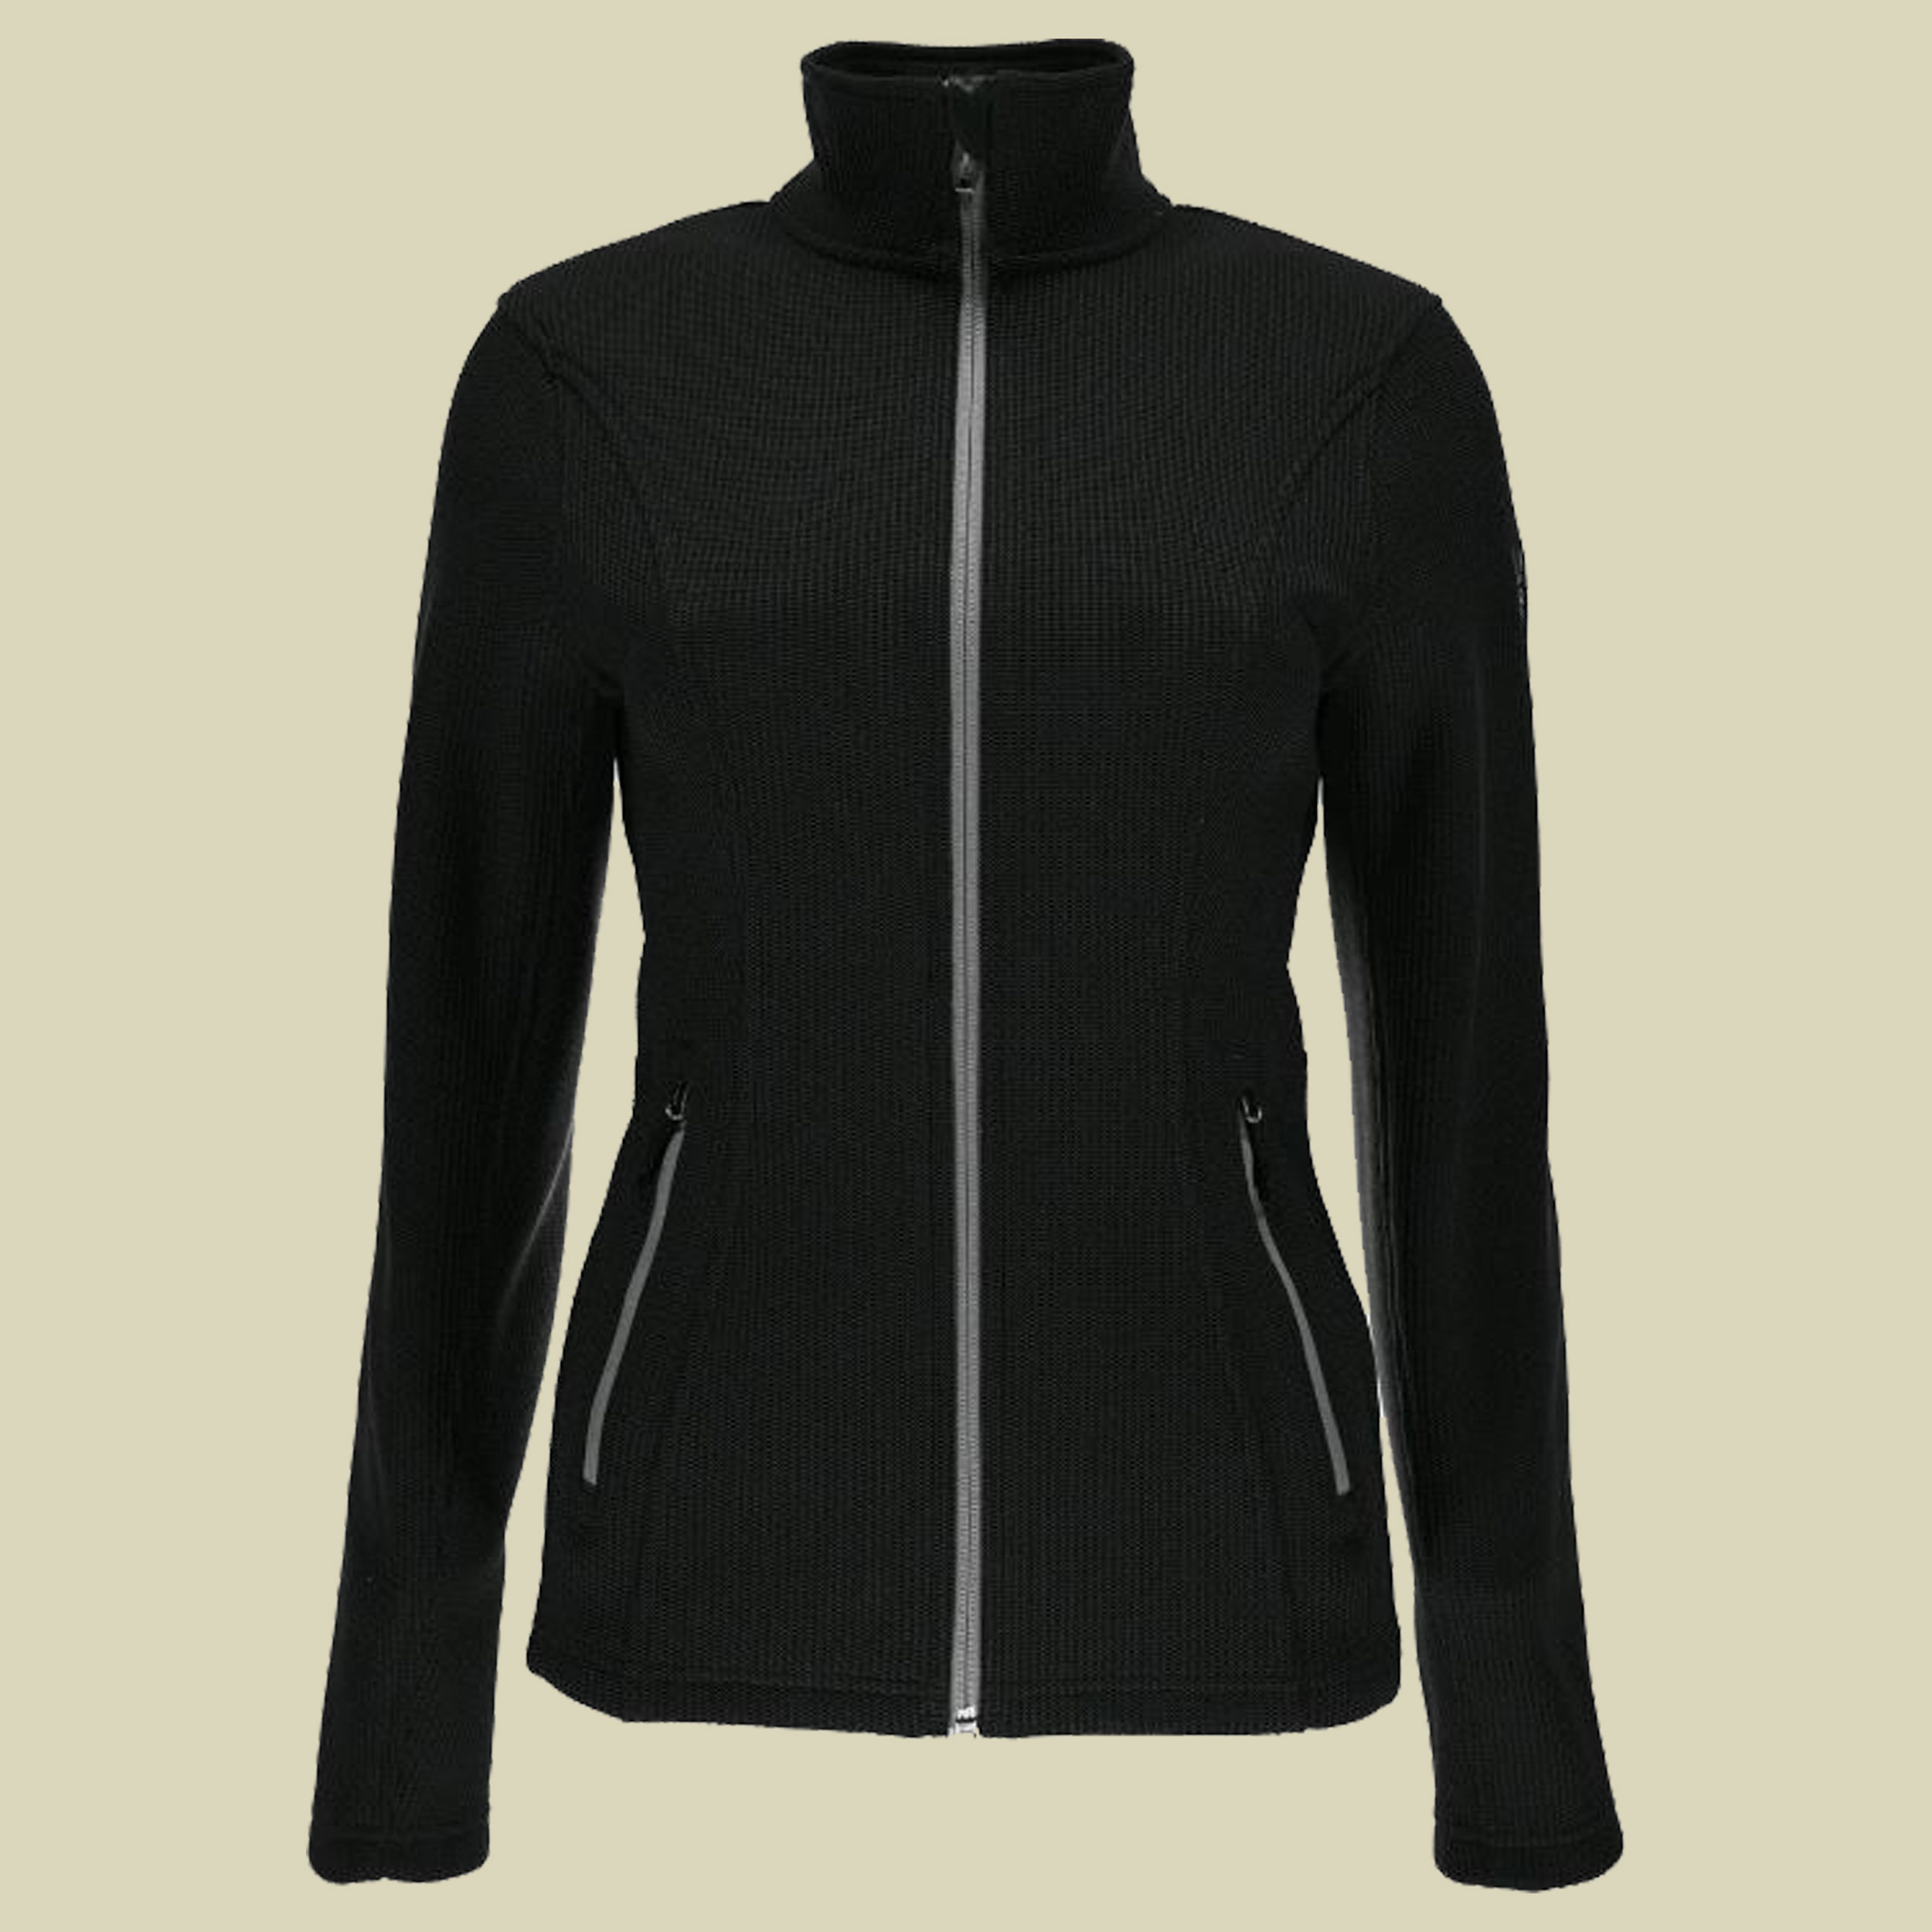 Endure Full Zip Mid WT Stryke Jacket Women Größe S Farbe black